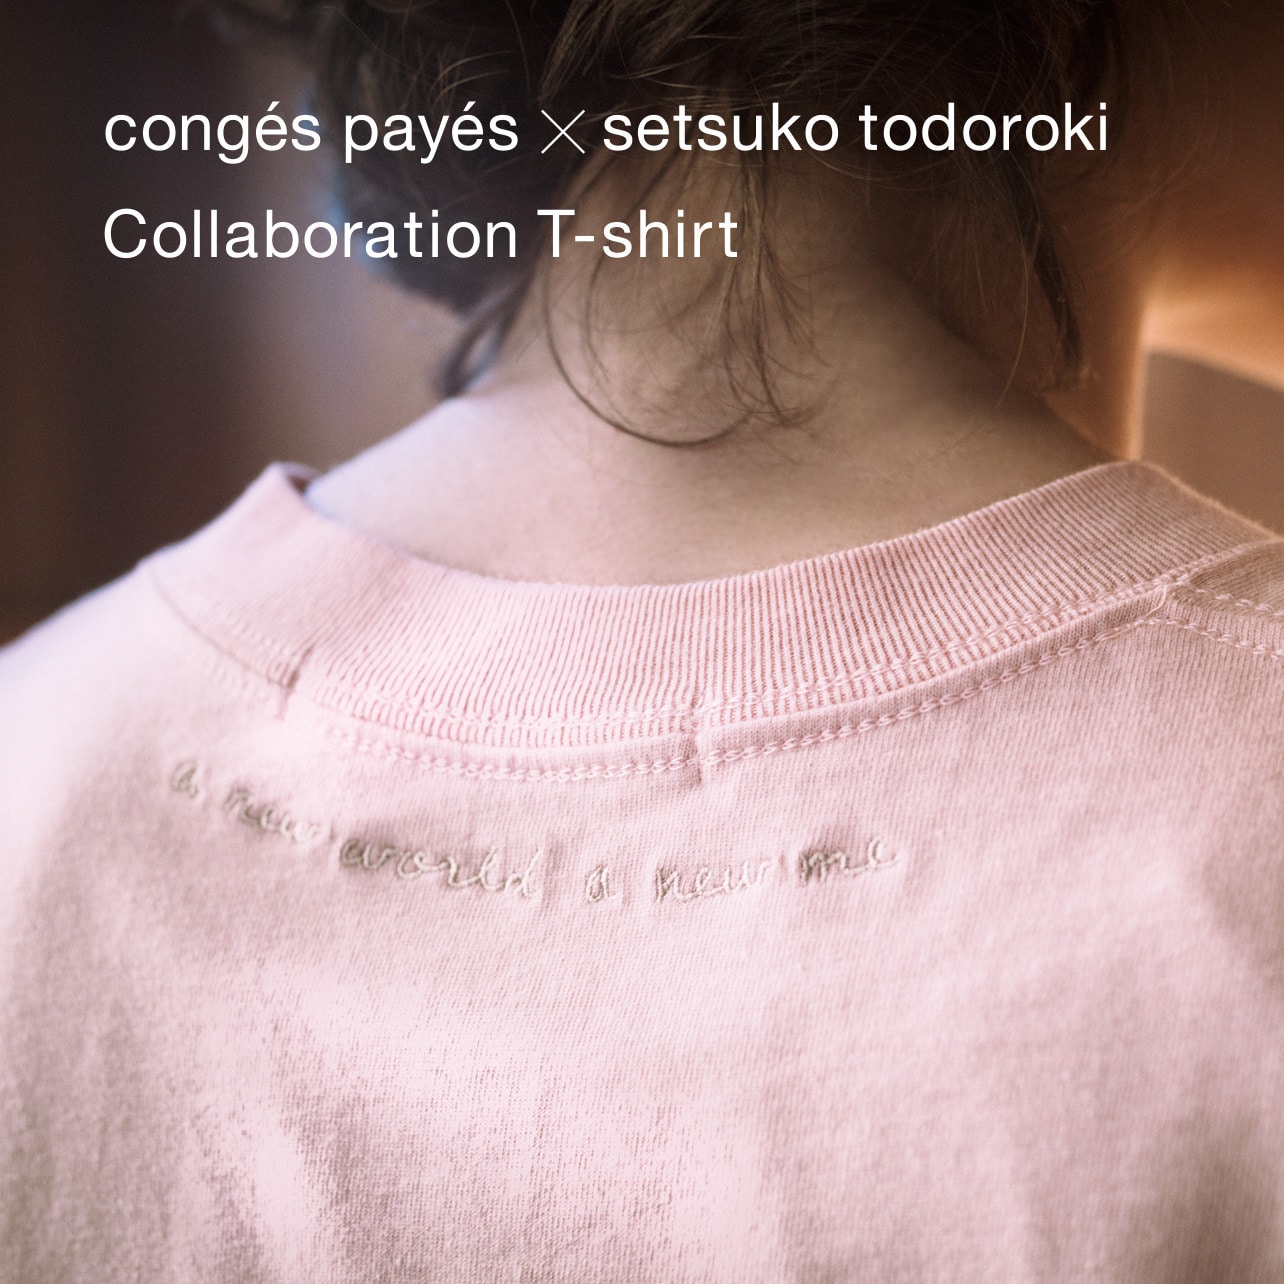 congés payés × setsuko todoroki Collaboration T-shirt